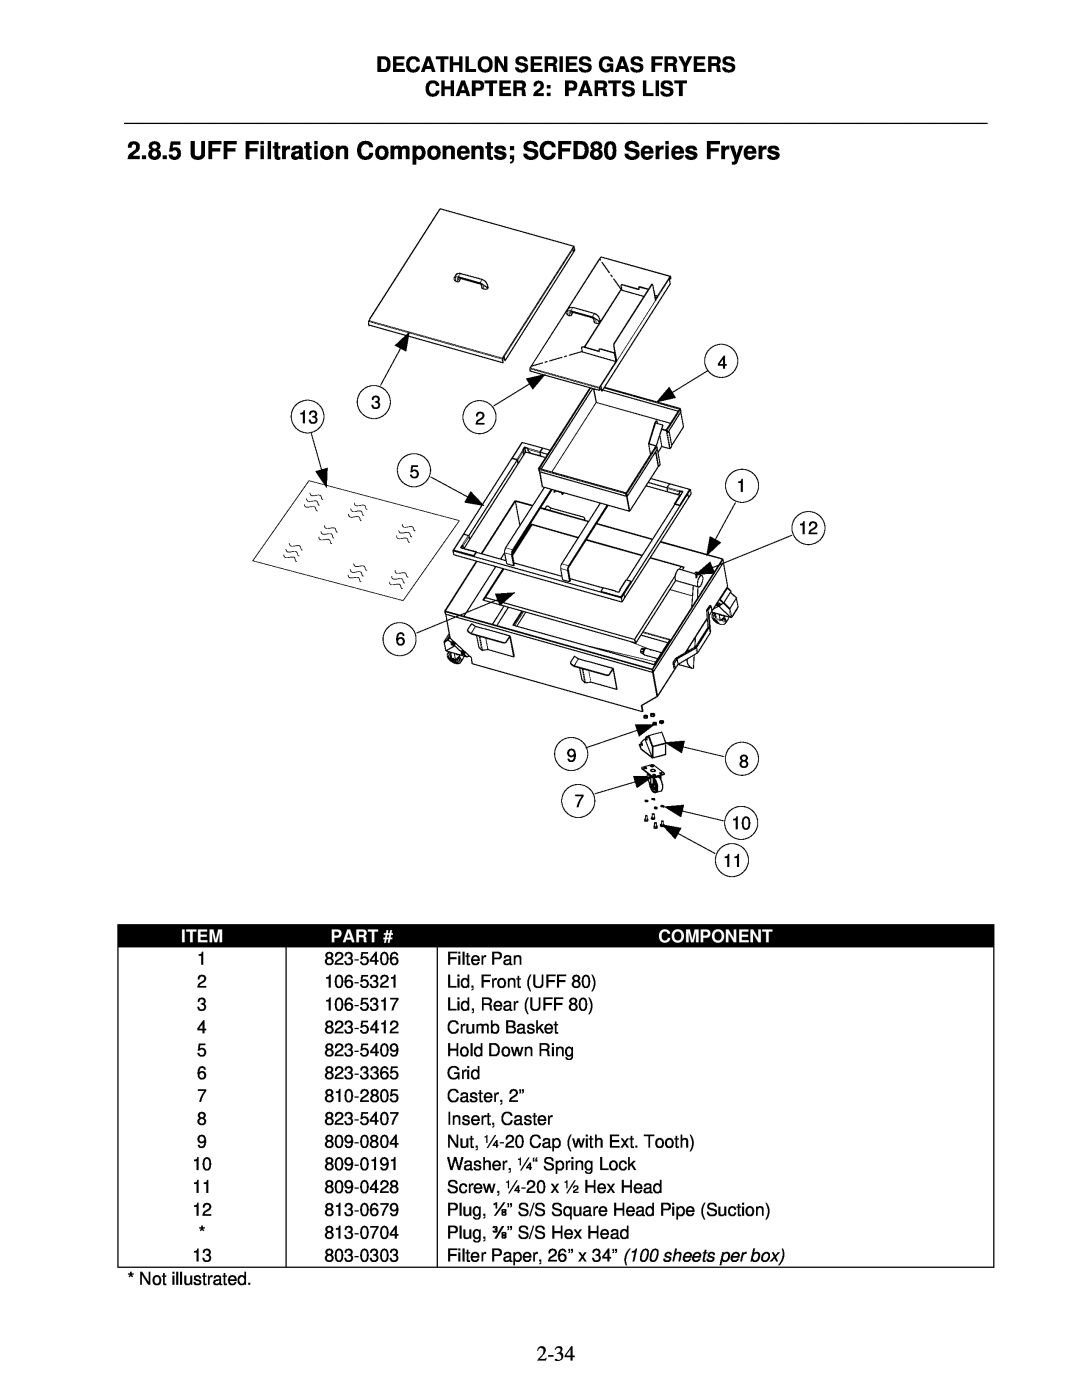 Frymaster FPD, SCFD manual Decathlon Series Gas Fryers Parts List, 4 3 132, Item, Part #, Component 